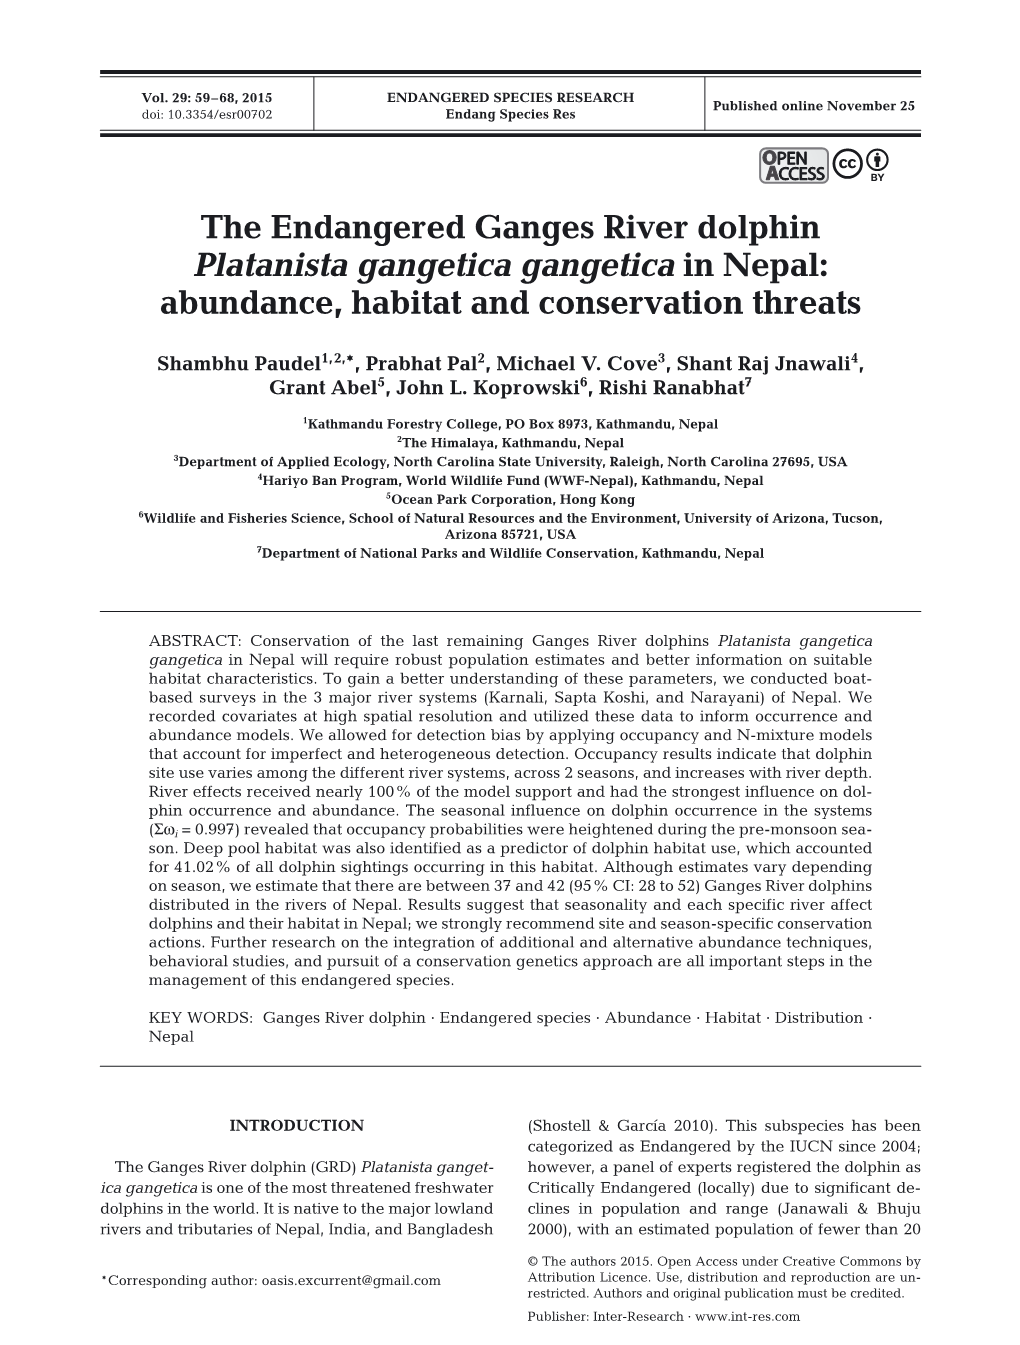 The Endangered Ganges River Dolphin Platanista Gangetica Gangetica in Nepal: Abundance, Habitat and Conservation Threats